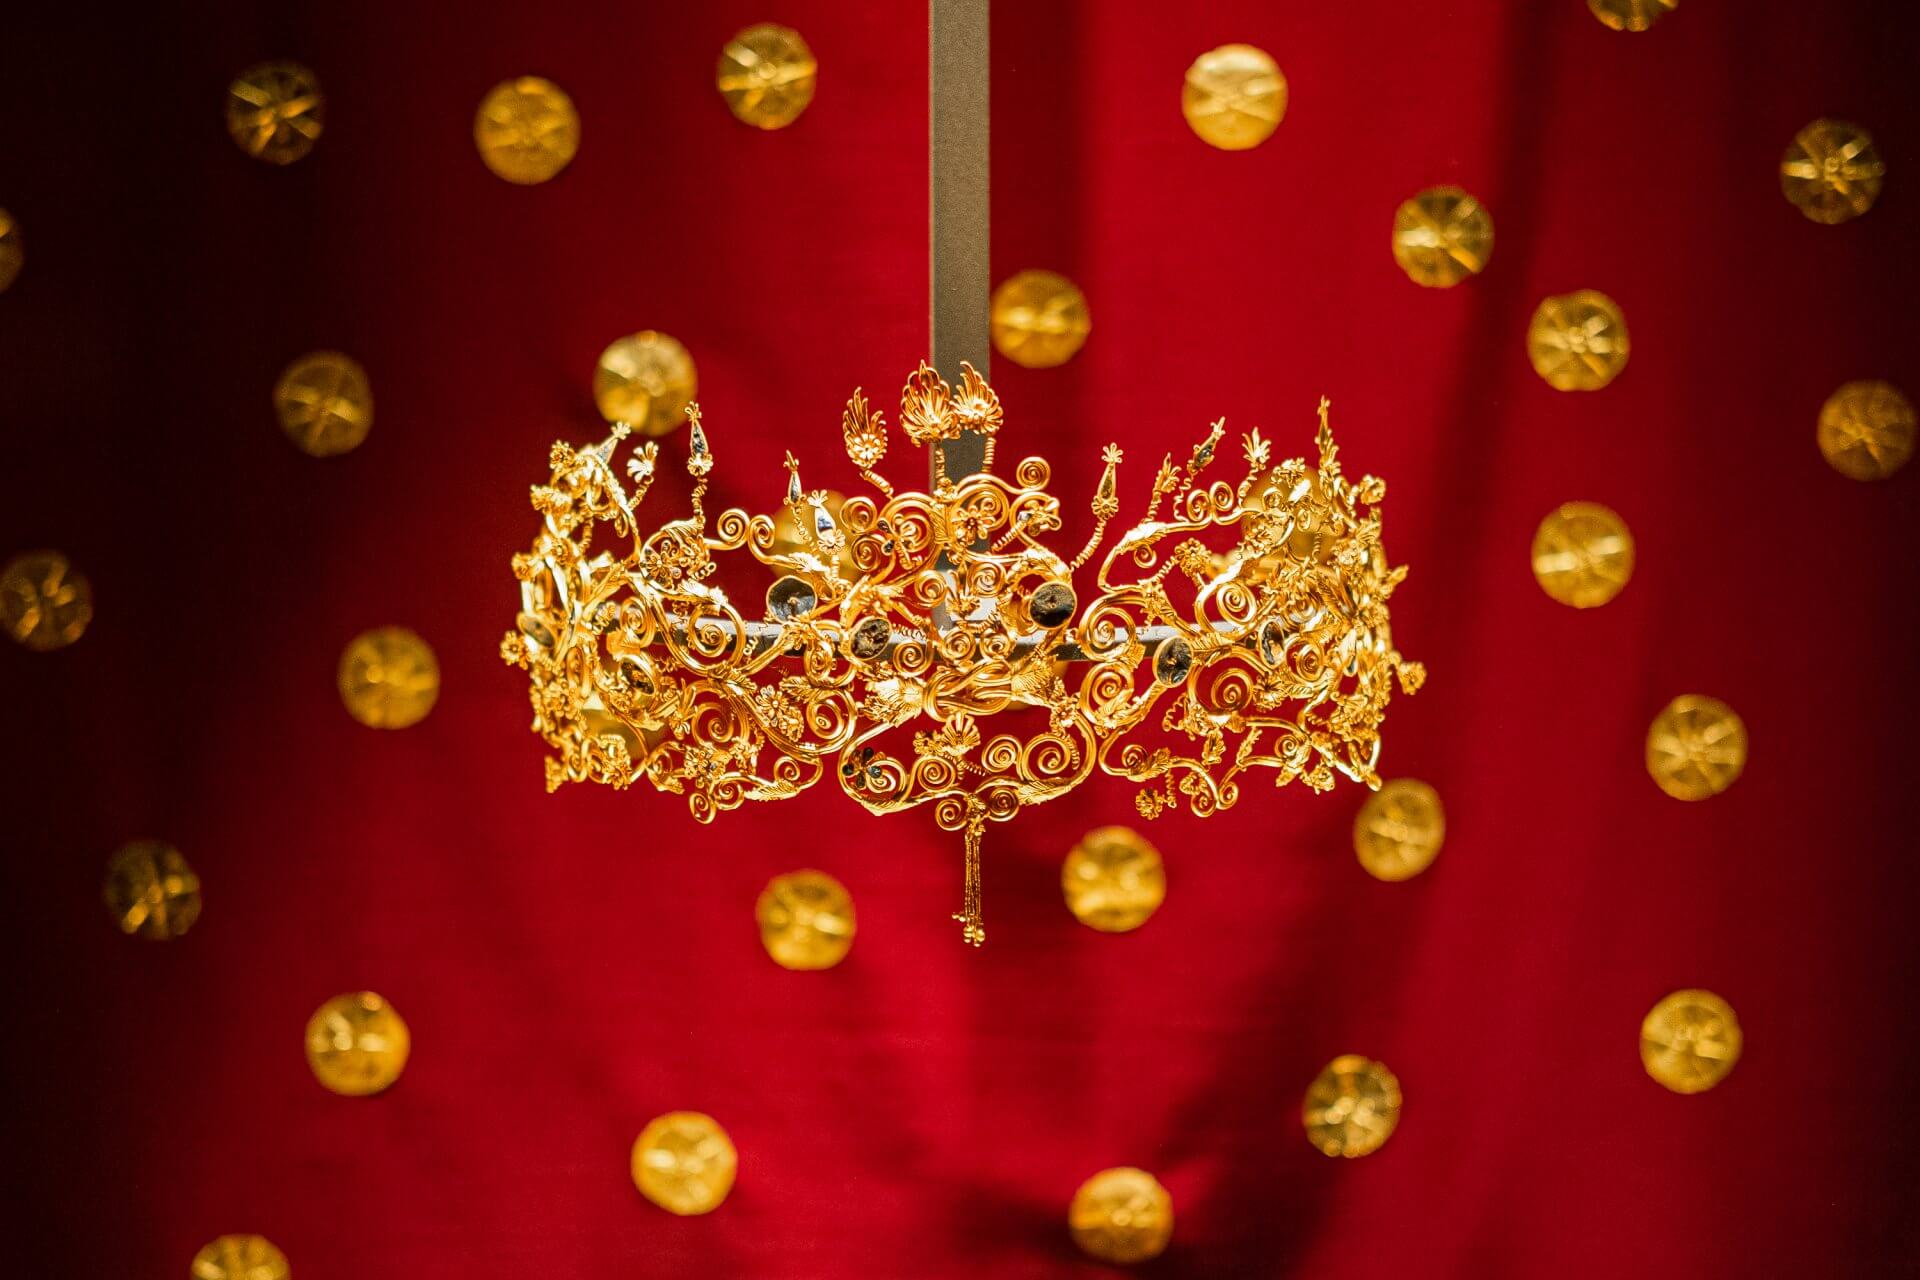 The golden oak wreath of Philip II